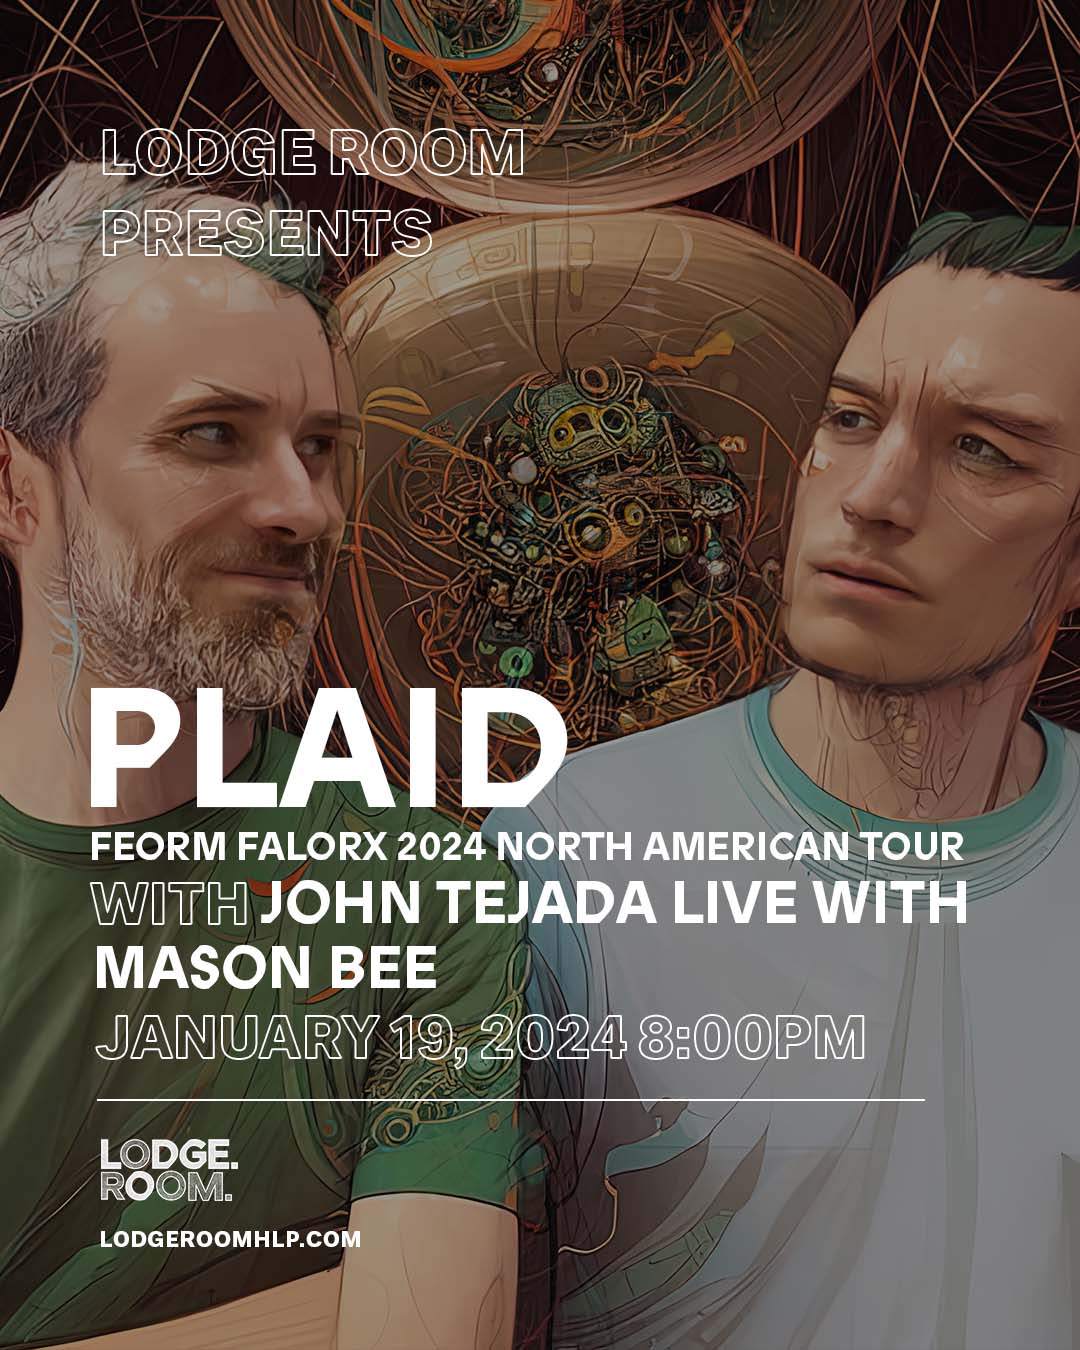 Lodge Room presents: Plaid and John Tejada with Mason Bee - フライヤー表